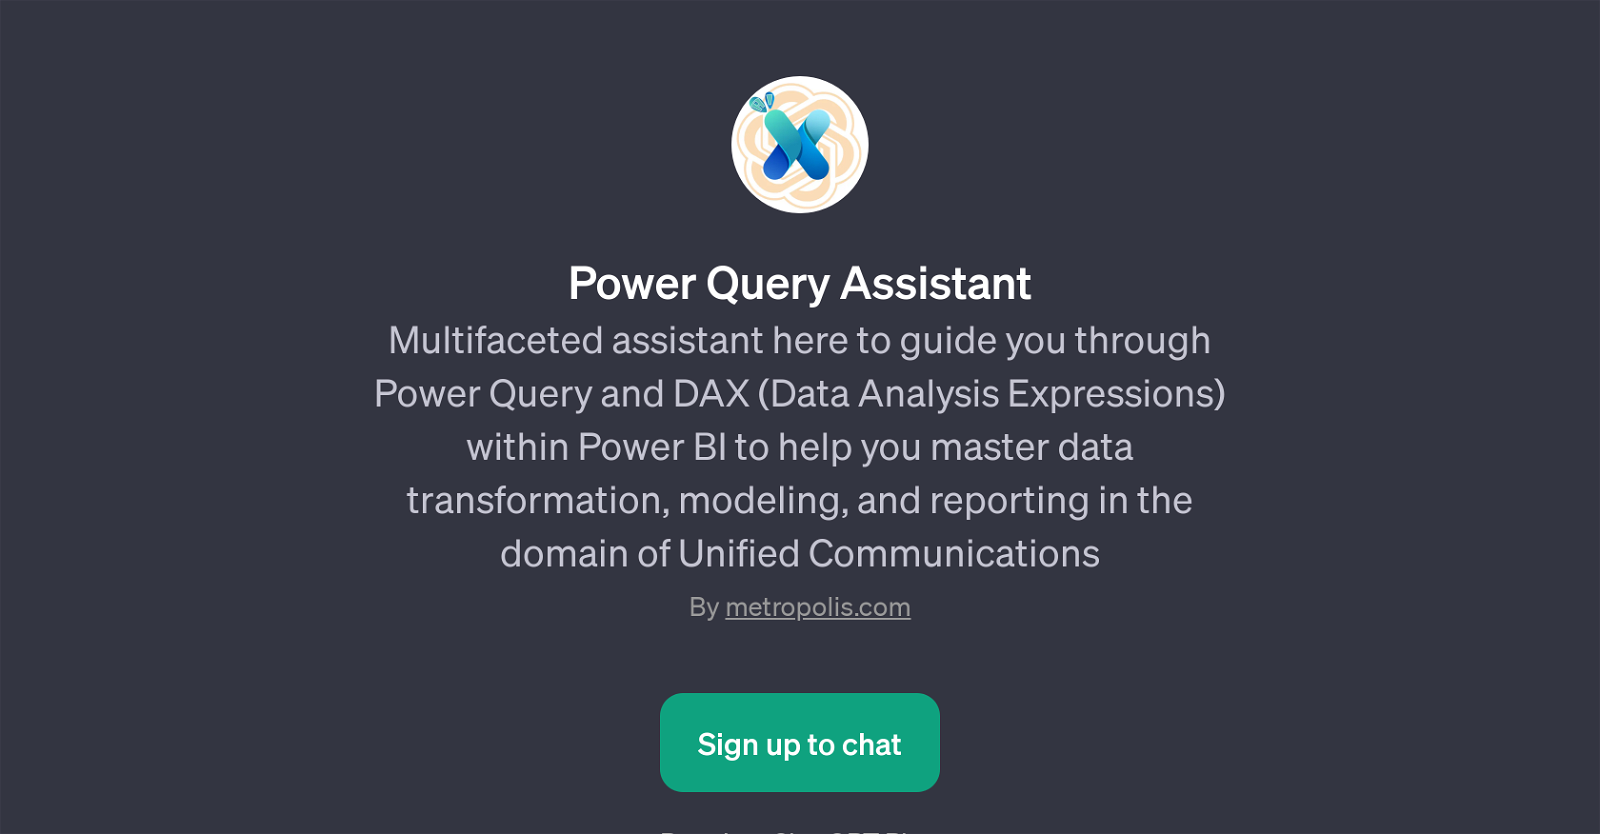 Power Query Assistant website